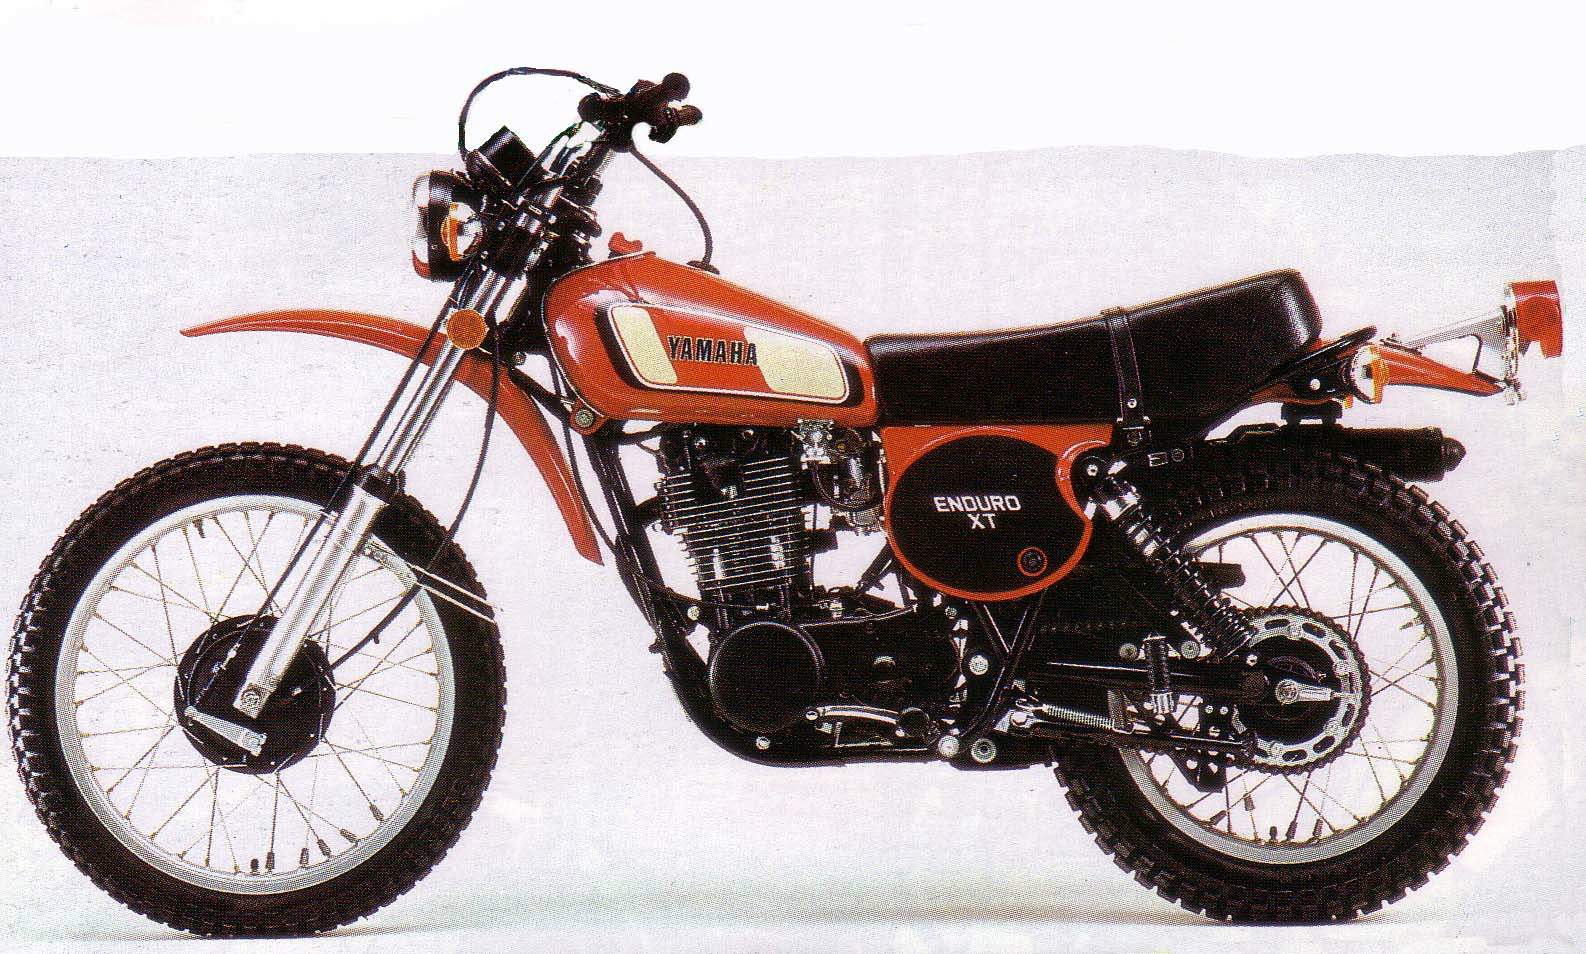 Yamaha XT 500 1980 photo - 1